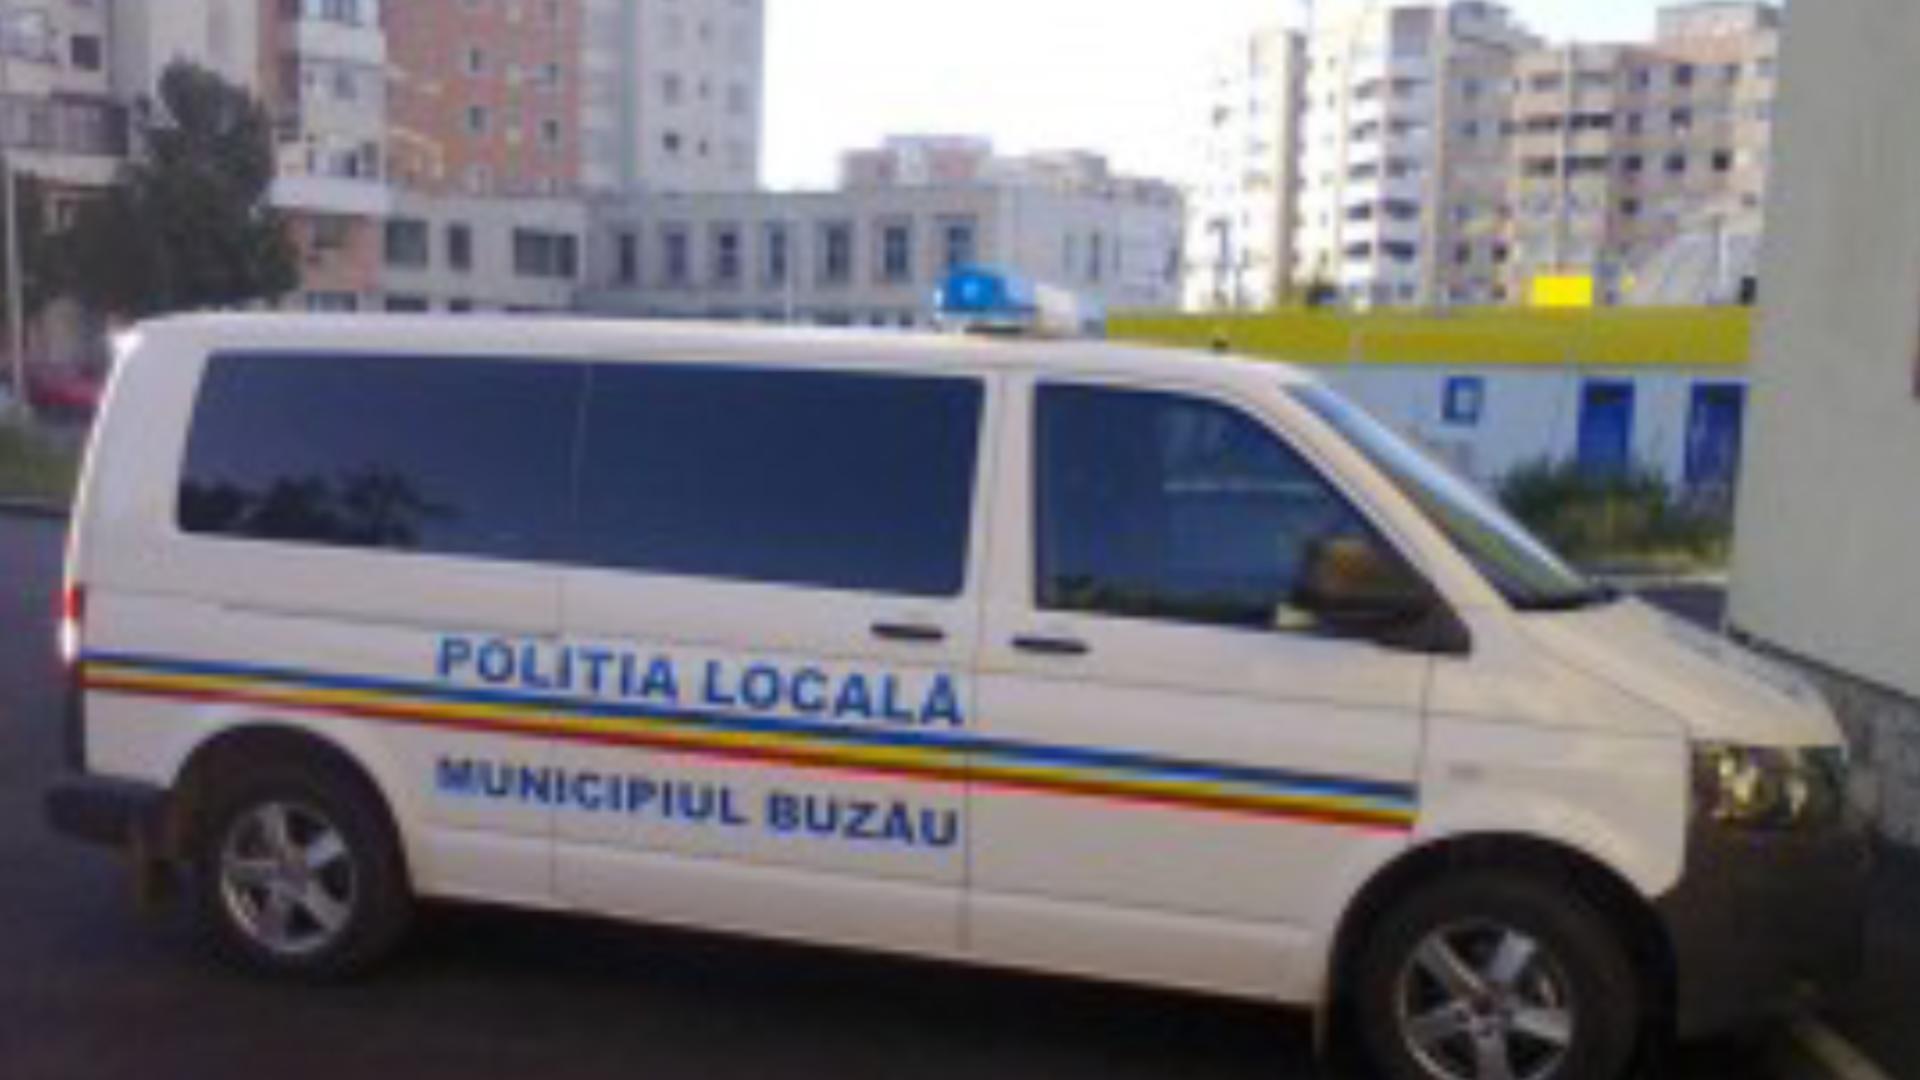 Politist local rapus de Covid-19 in Buzau